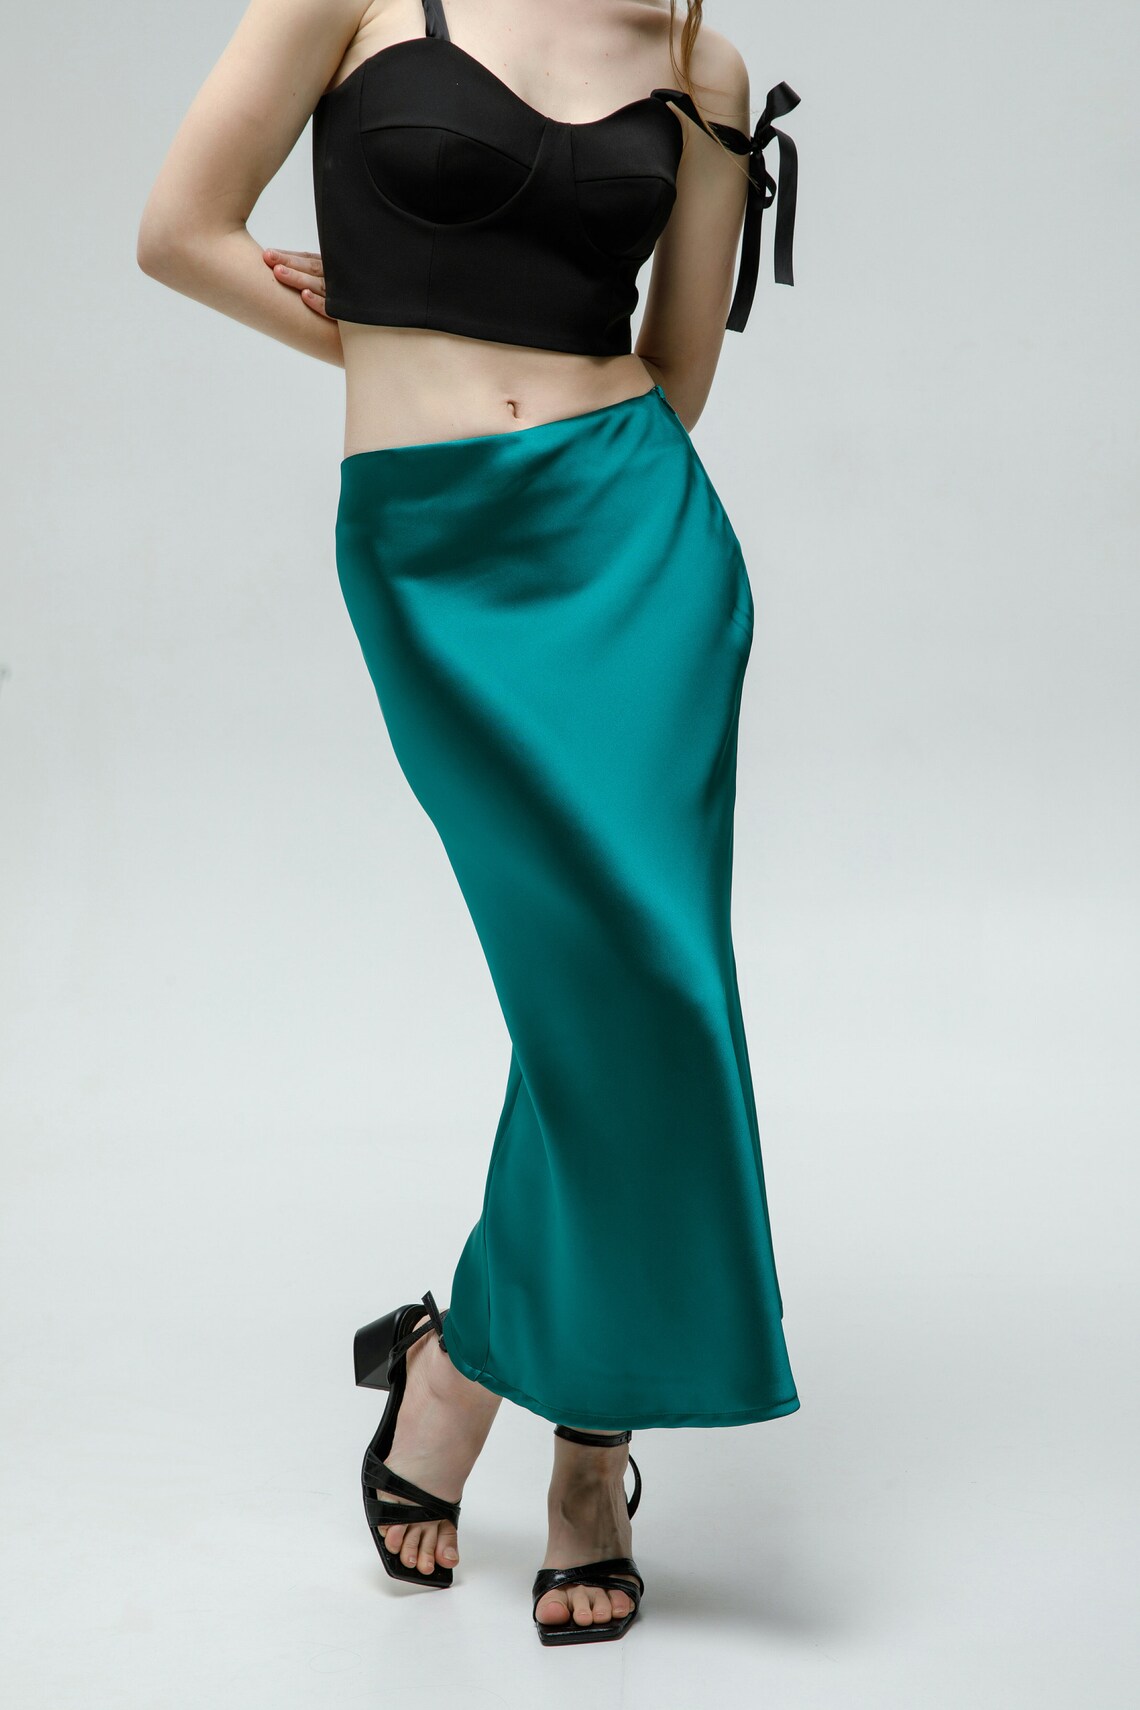 Emerald green skirt Silk midi skirt High waisted skirt Bias | Etsy